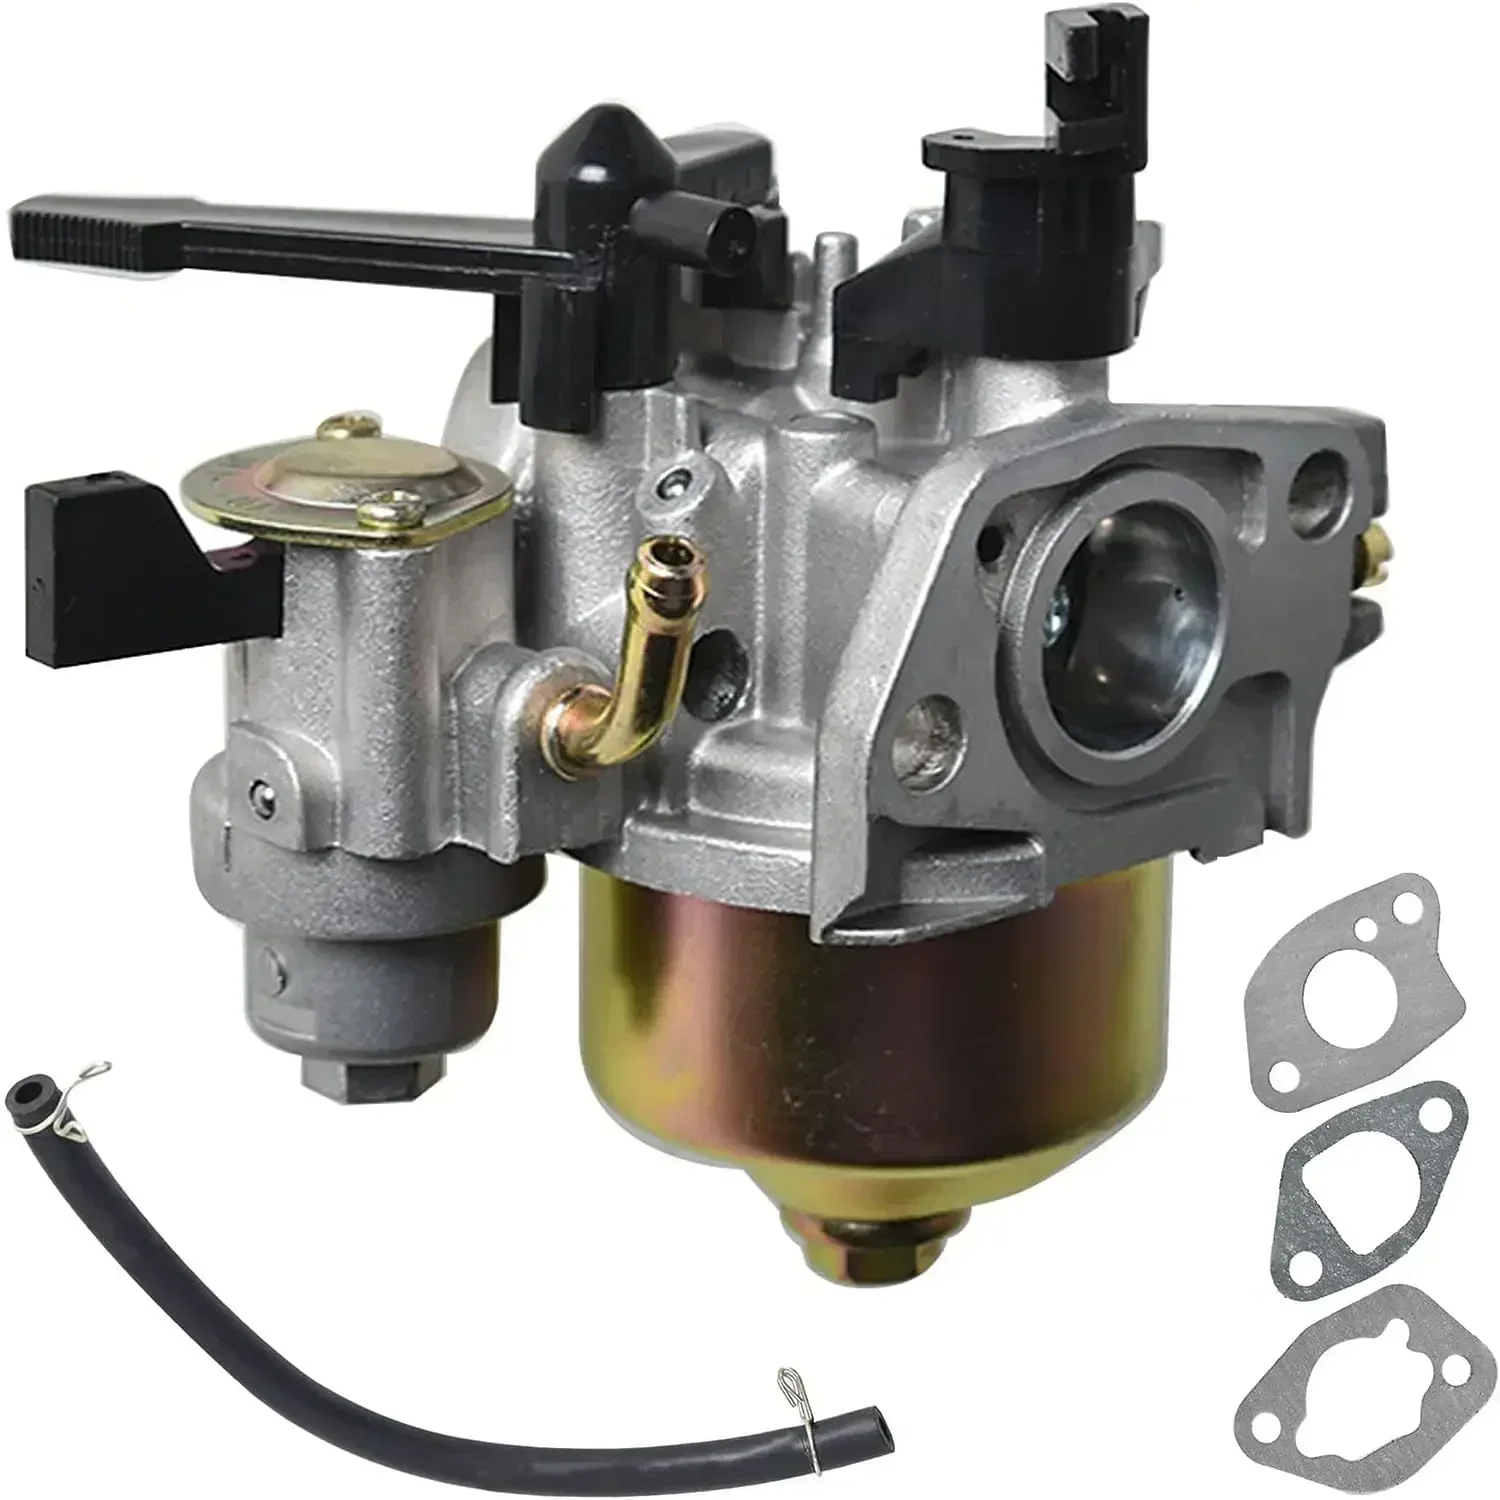 

Carburetor Replacement for Honda GX160 GX200 5.5HP 6.5HP 16100-ZH8-W61 W/Choke Lever Carb